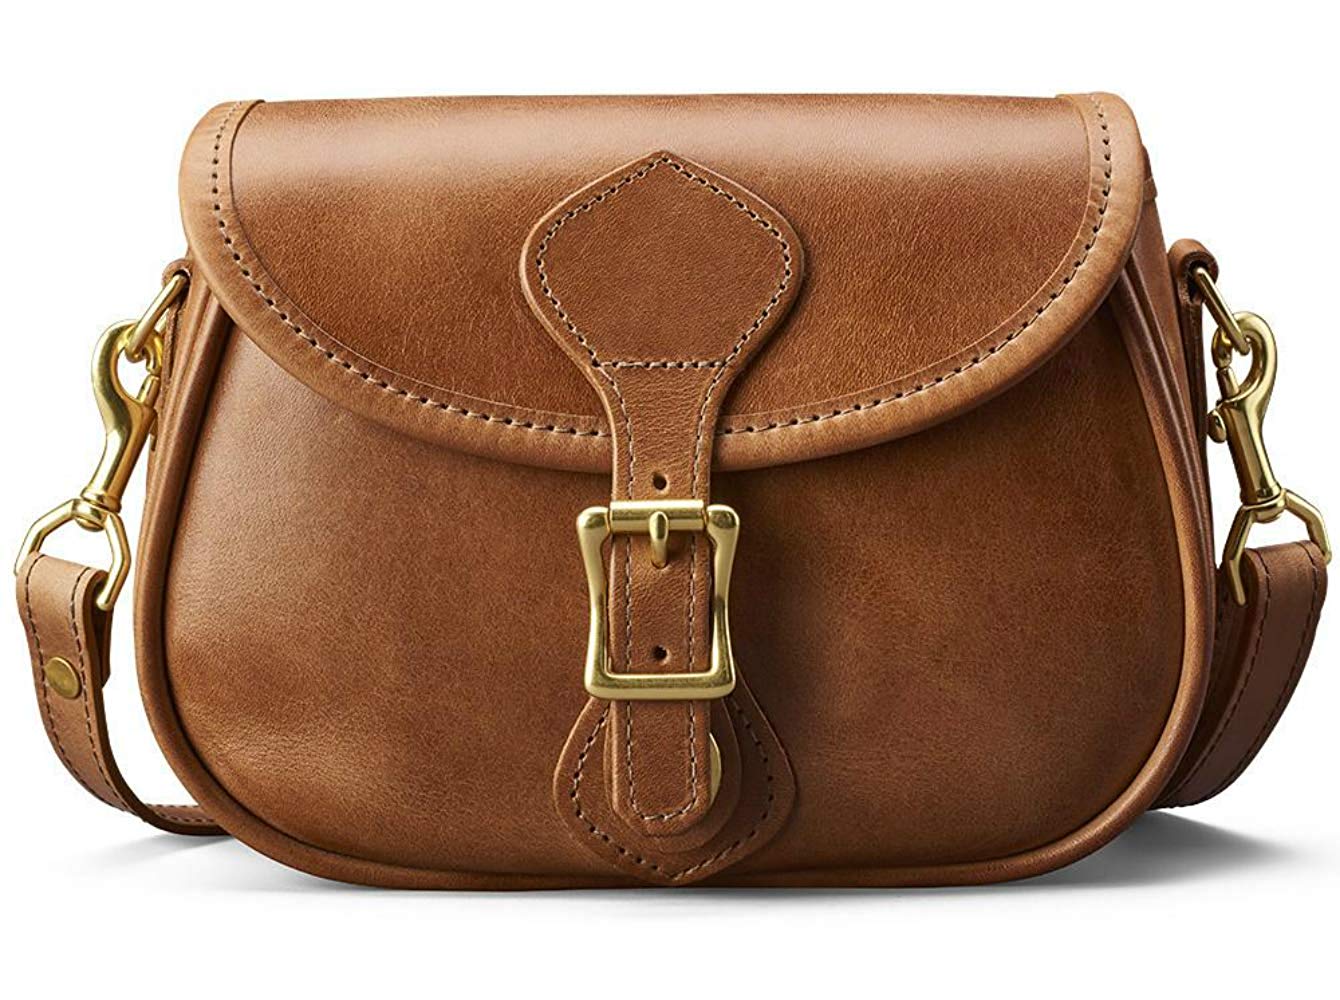 J.W. Hulme Legacy Handbag Product Image